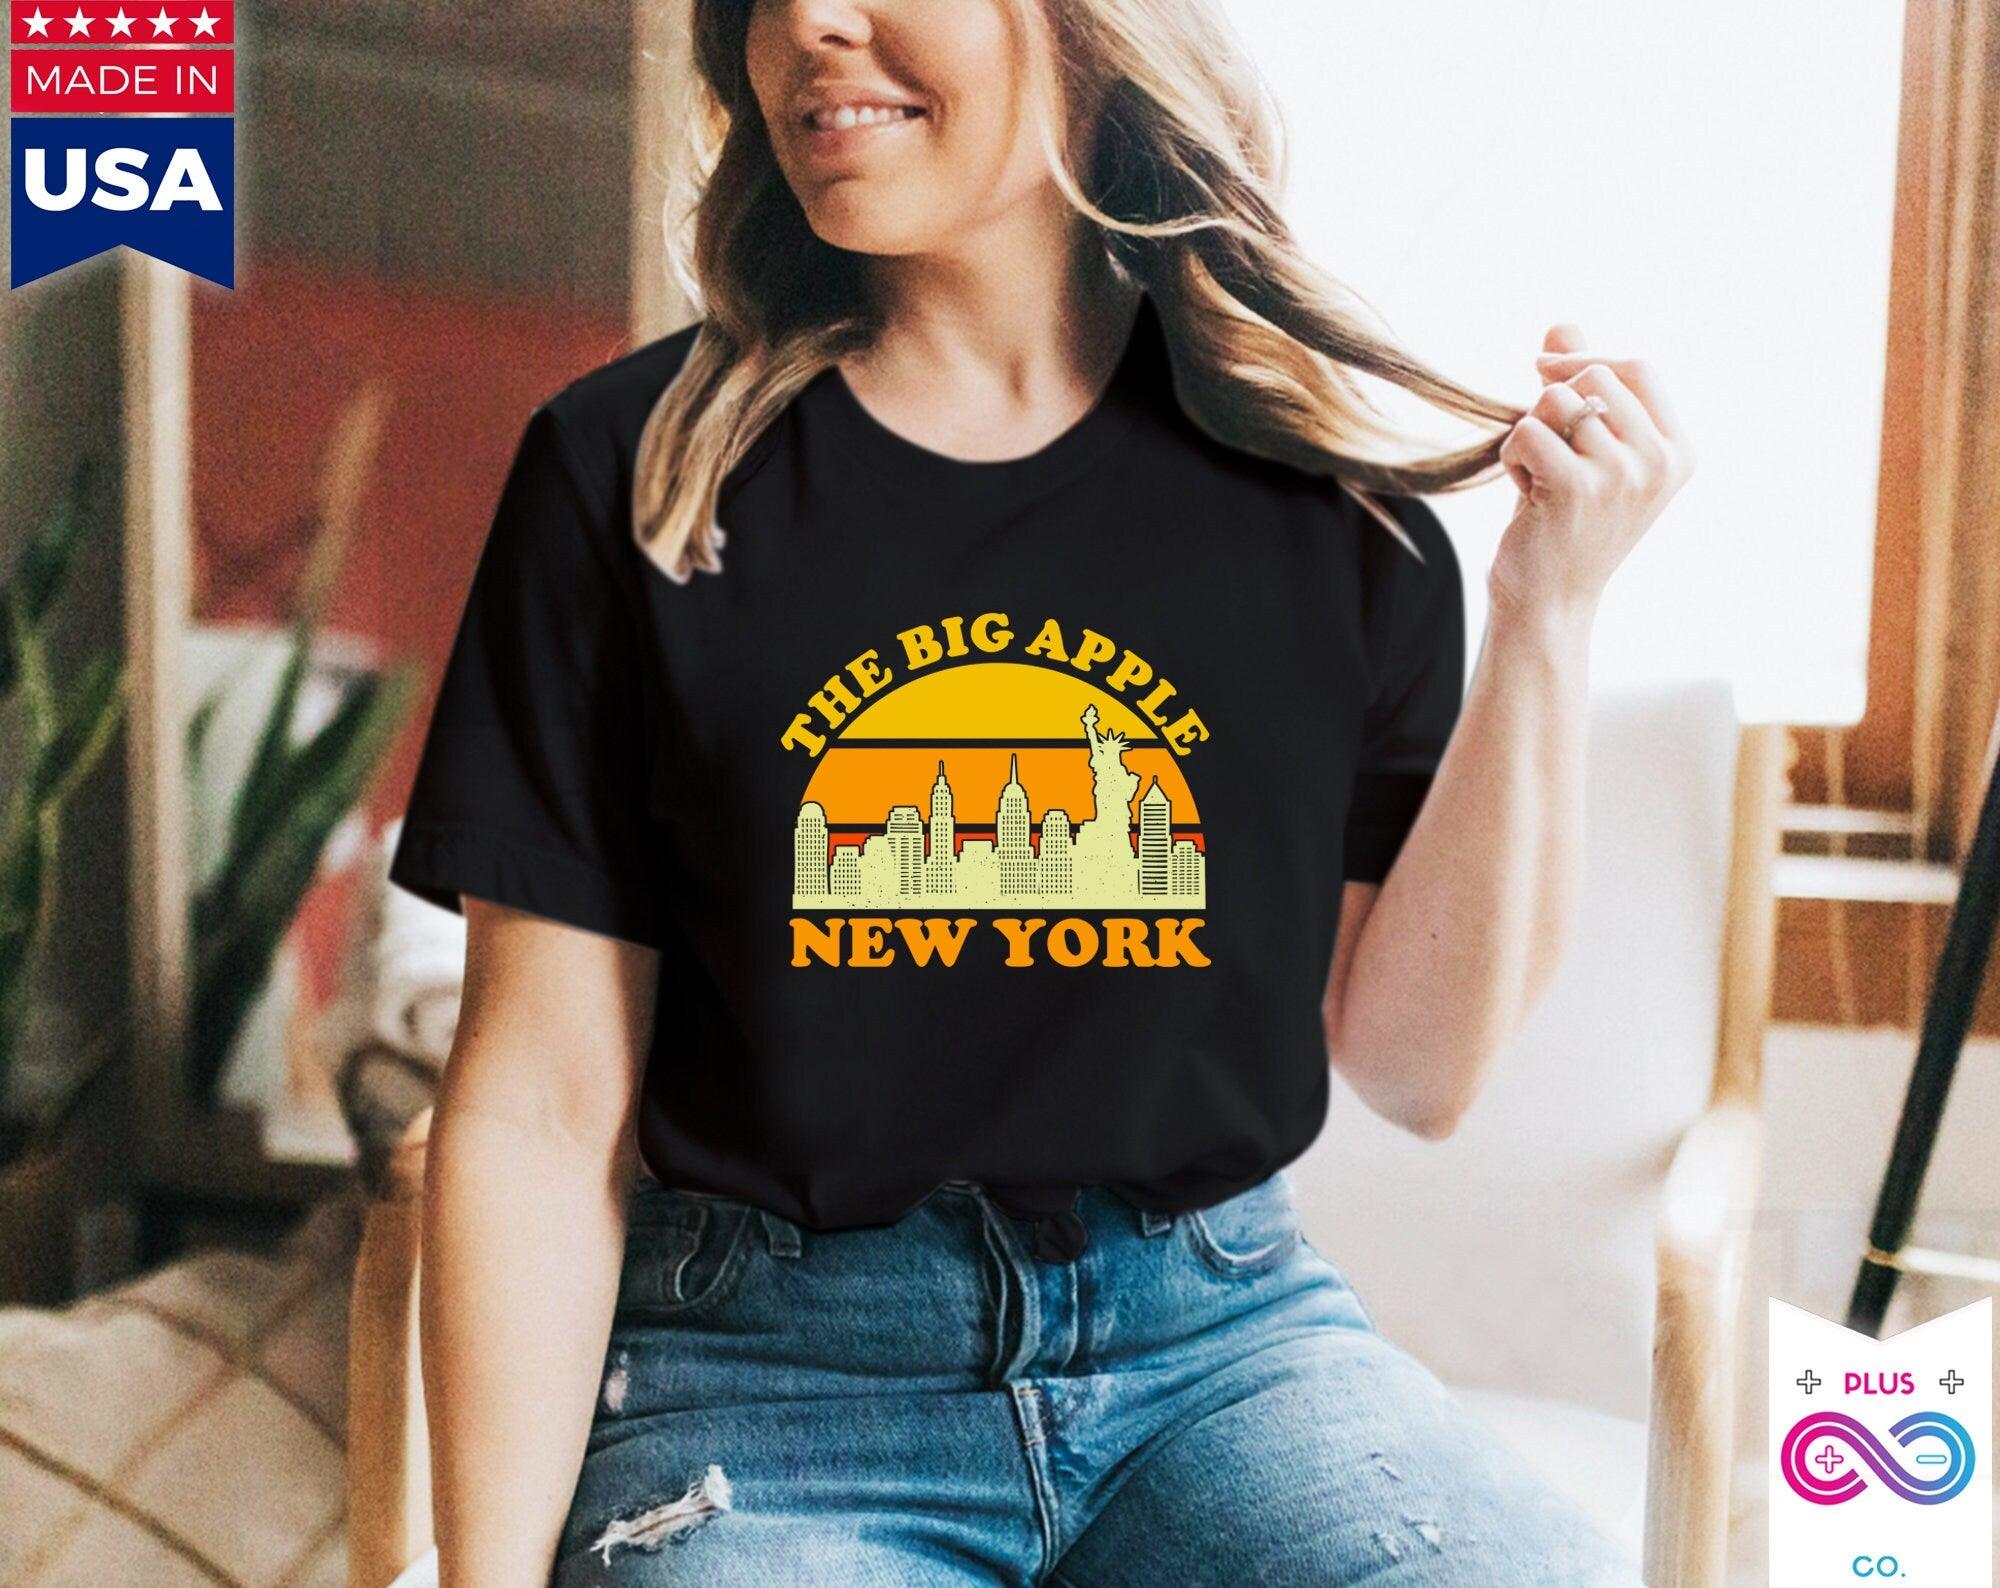 The Big Apple New York | Retro Sunset T-skjorter, New York City Skyline Souvenir Tee, NYC festkostyme, Visit Trip Travel NY, Manhattan - plusminusco.com